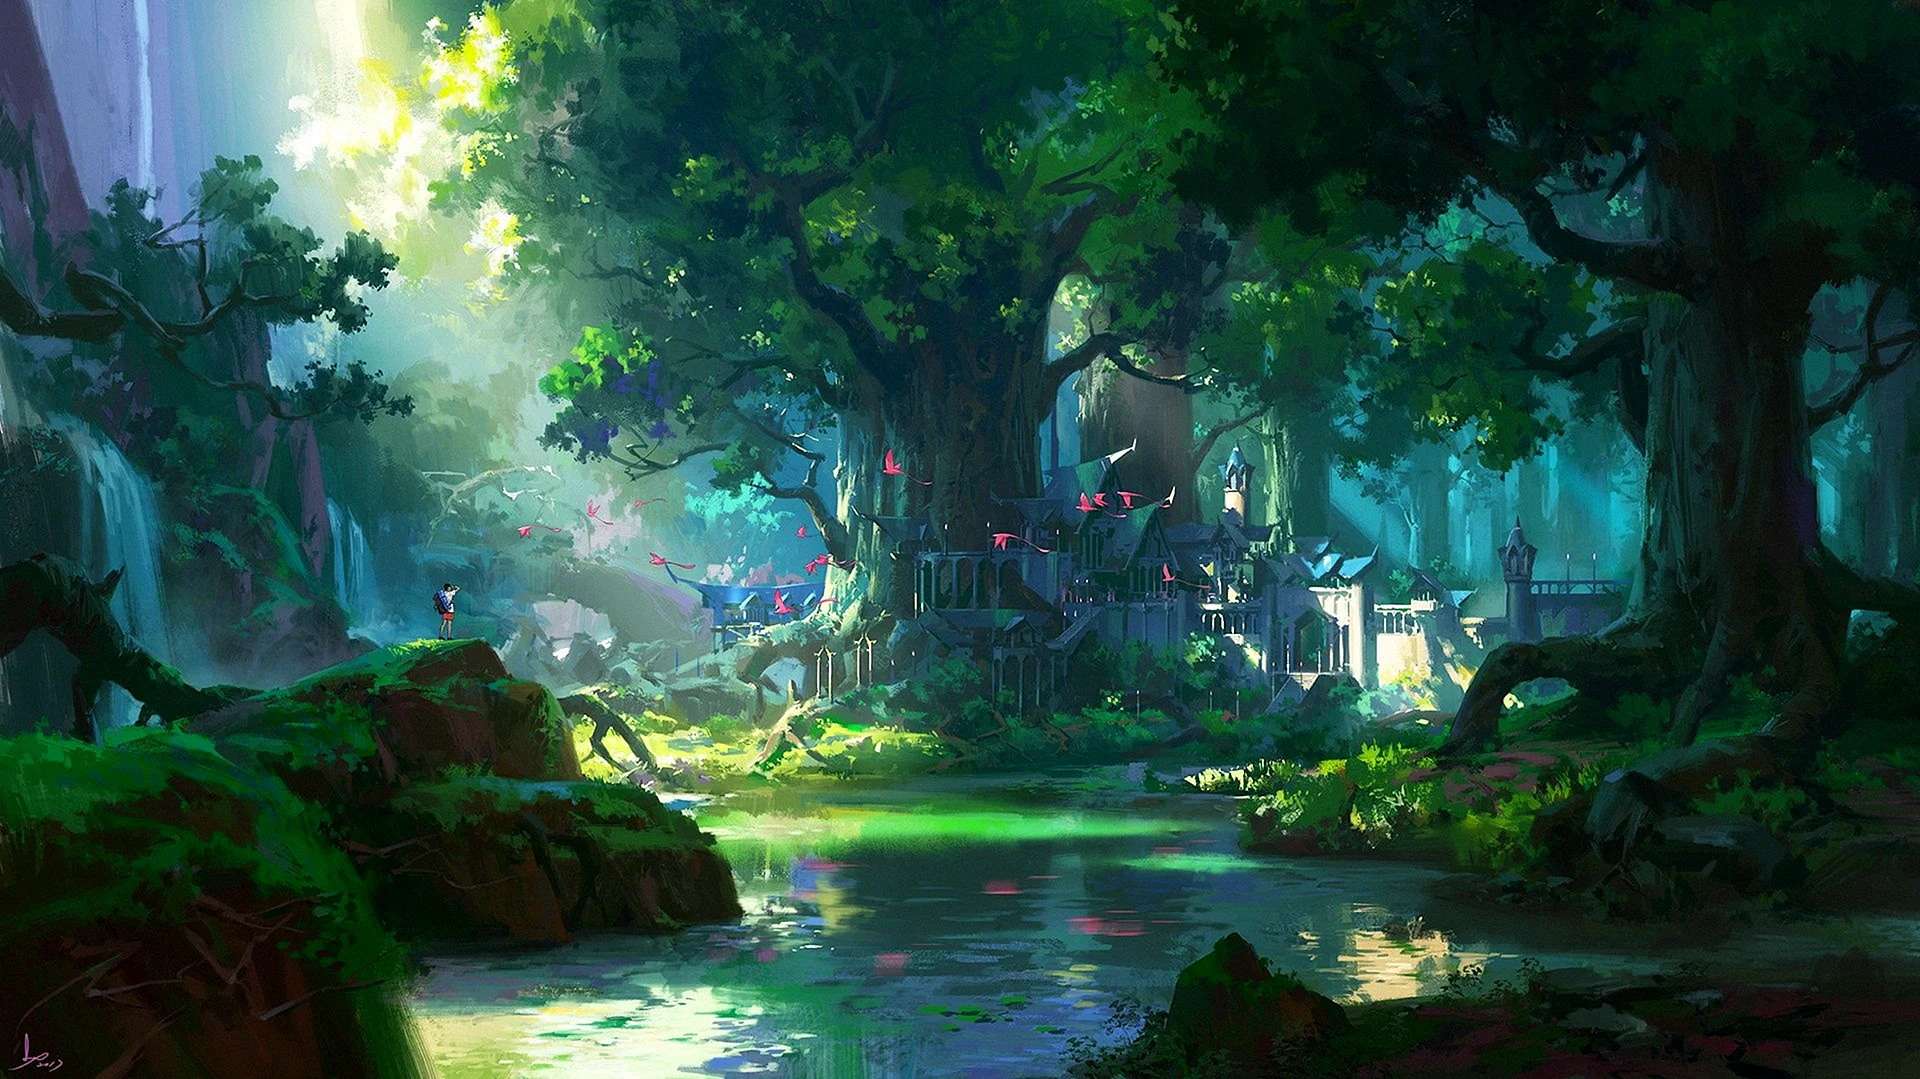 Anime Magic Forest Wallpaper